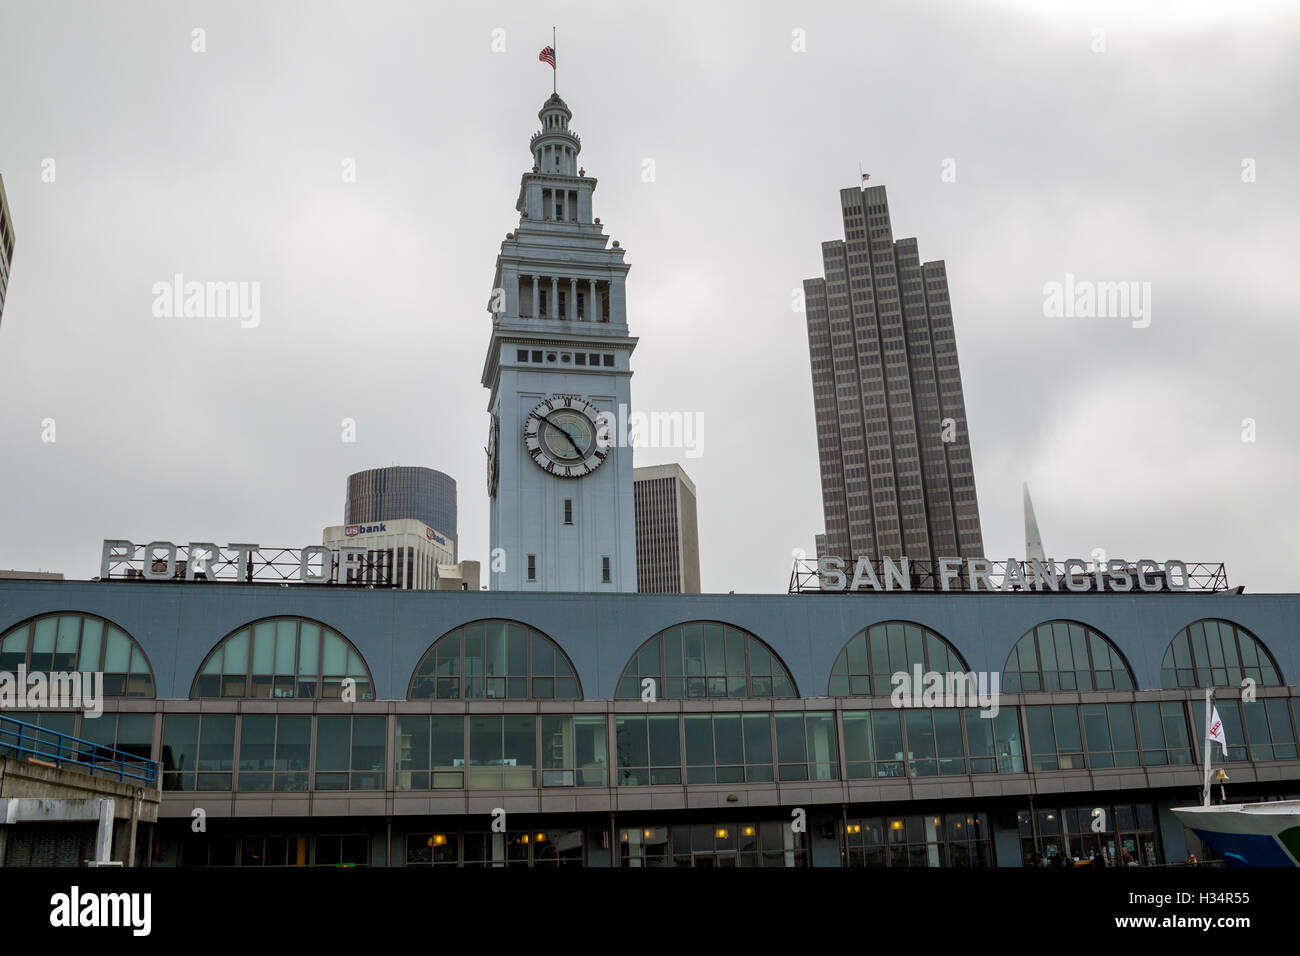 San Francisco Ferry Building in the port of San Francisco, California, USA. Stock Photo